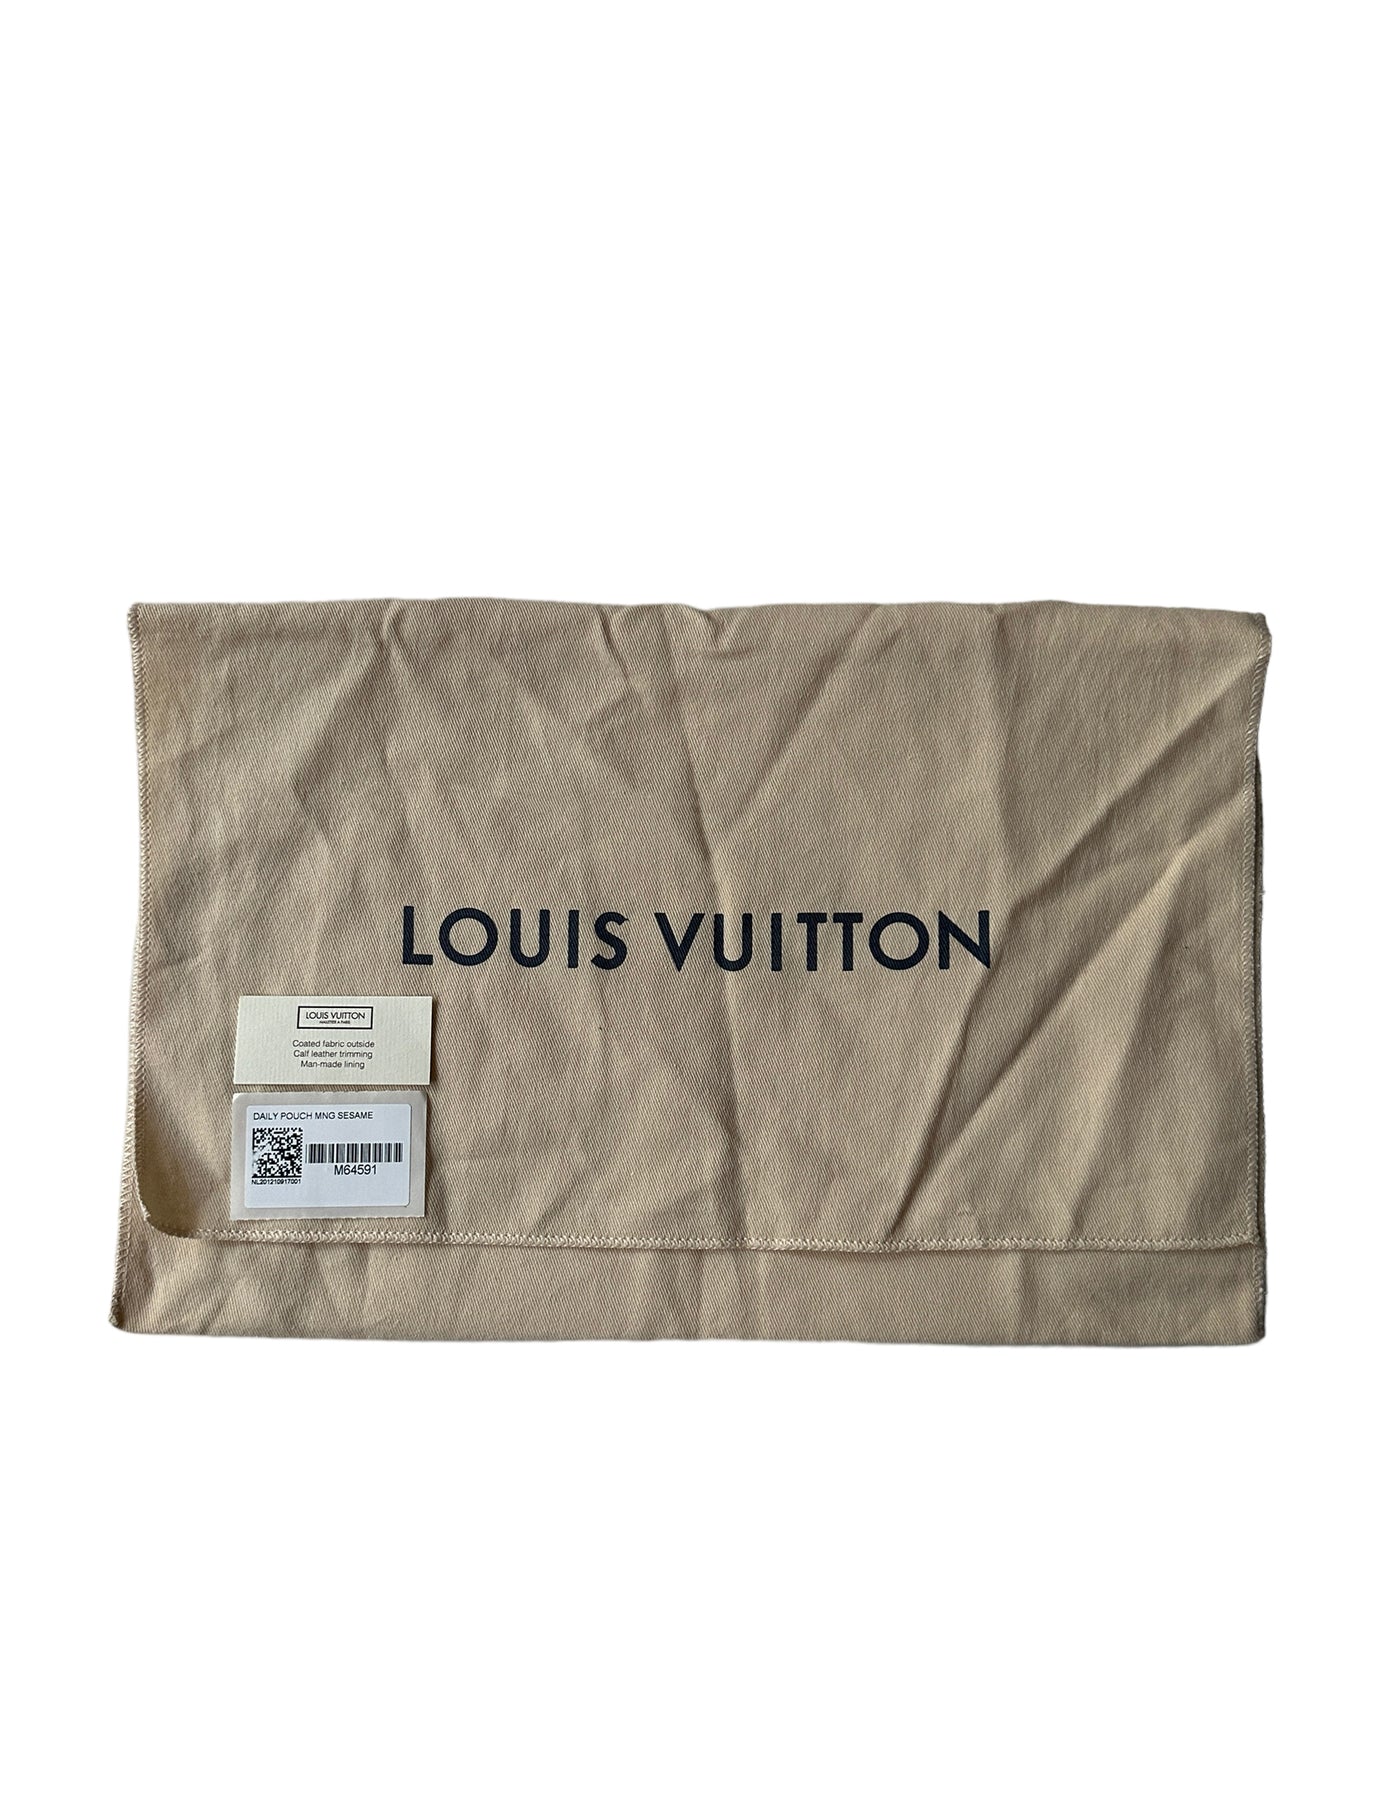 Louis Vuitton Damier Ebene Coated Canvas Daily Pouch